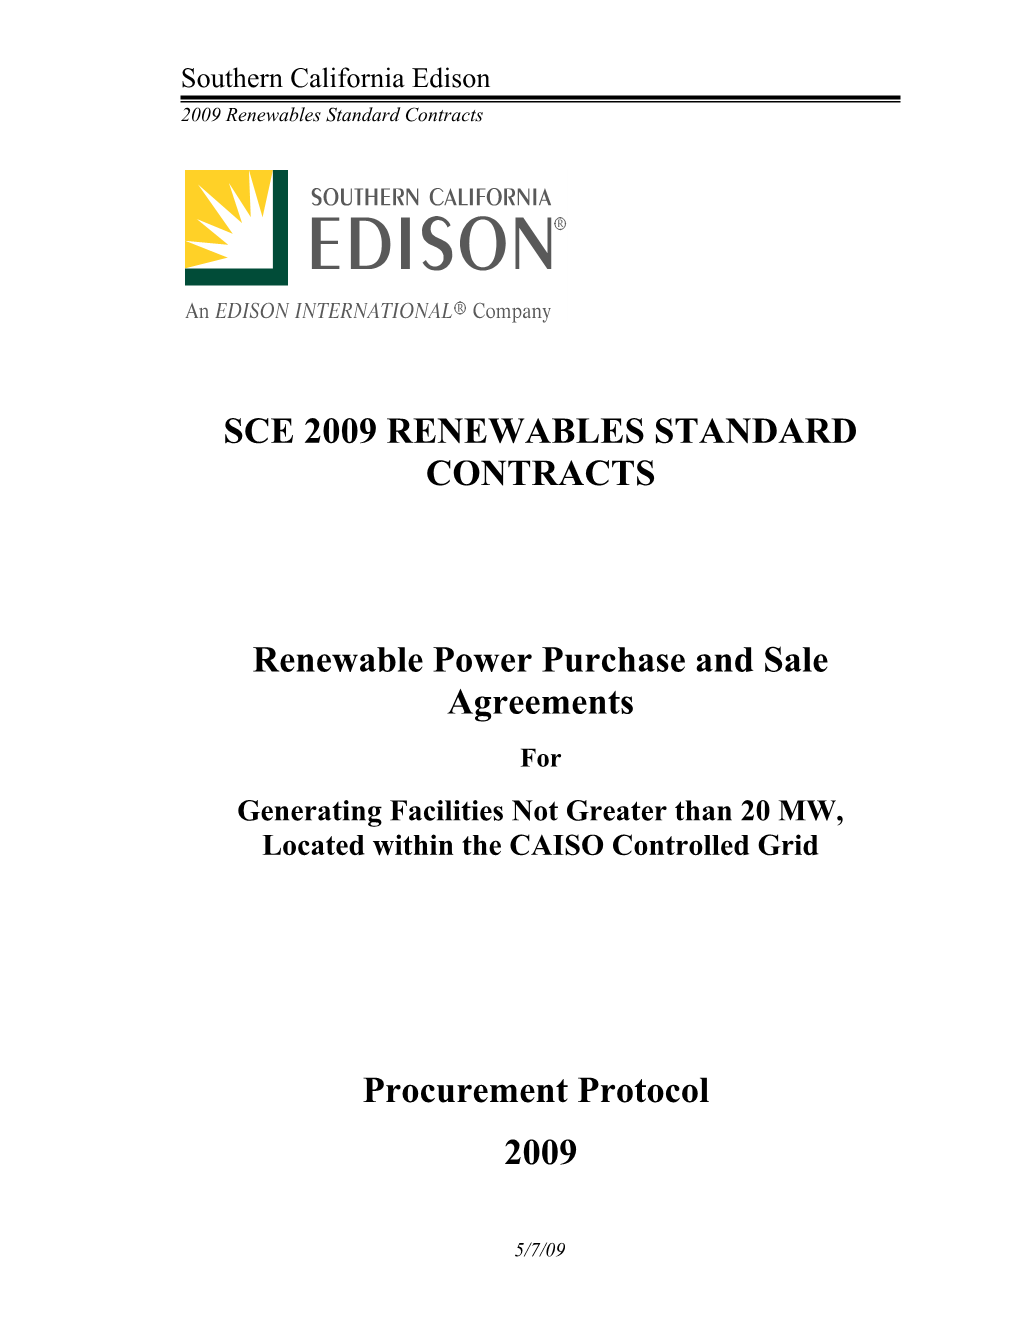 SCE's 2006 Renewable RFP